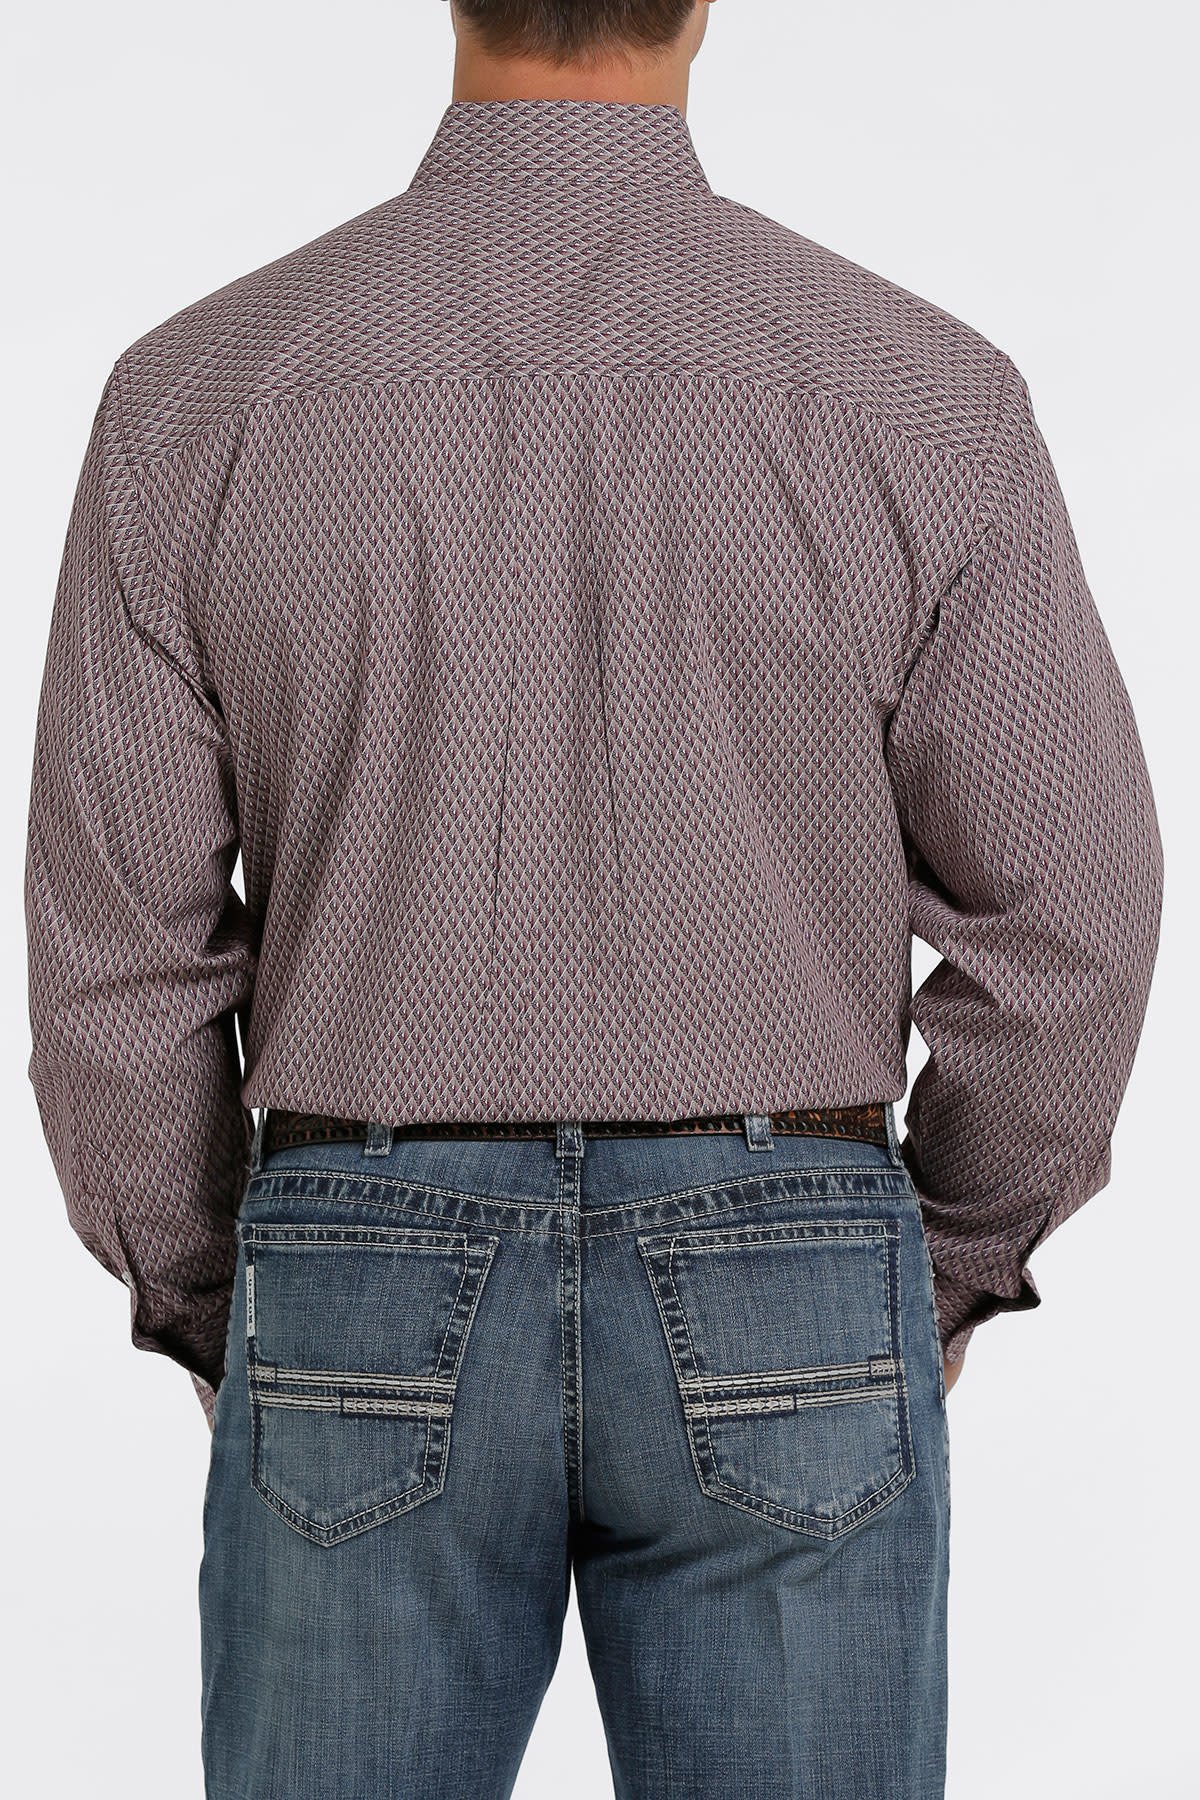 Boys Cinch Multi Purple Diamond Print Long Sleeve Button Western Shirt -  Cowpokes Western Shop